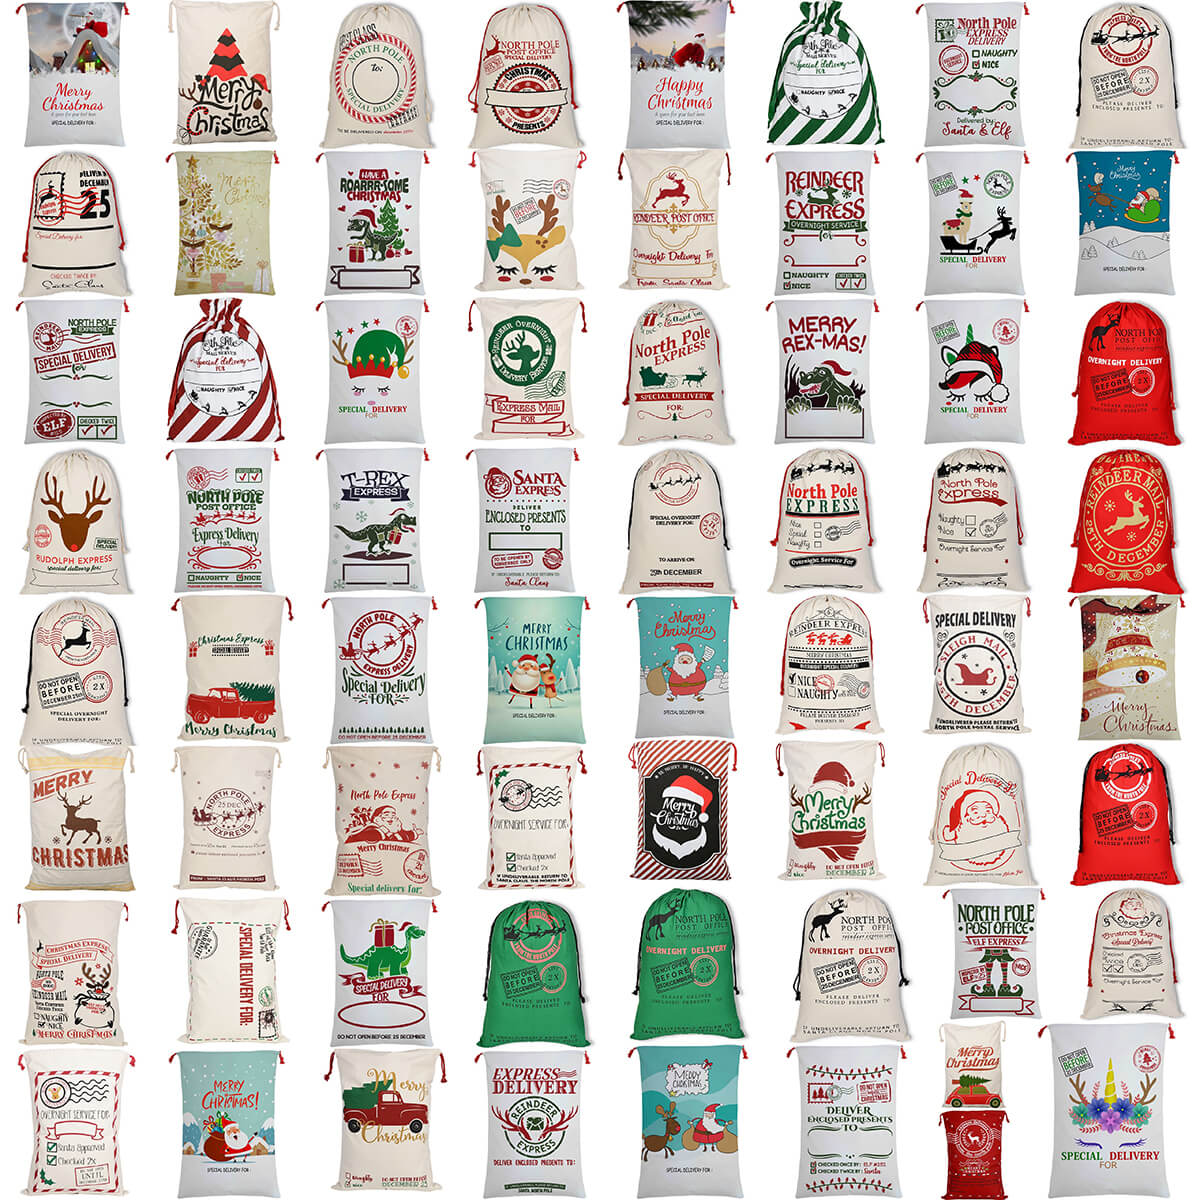 Large Christmas XMAS Hessian Santa Sack Stocking Bag Reindeer Children Gifts Bag, Cream - Santa Coming To Town